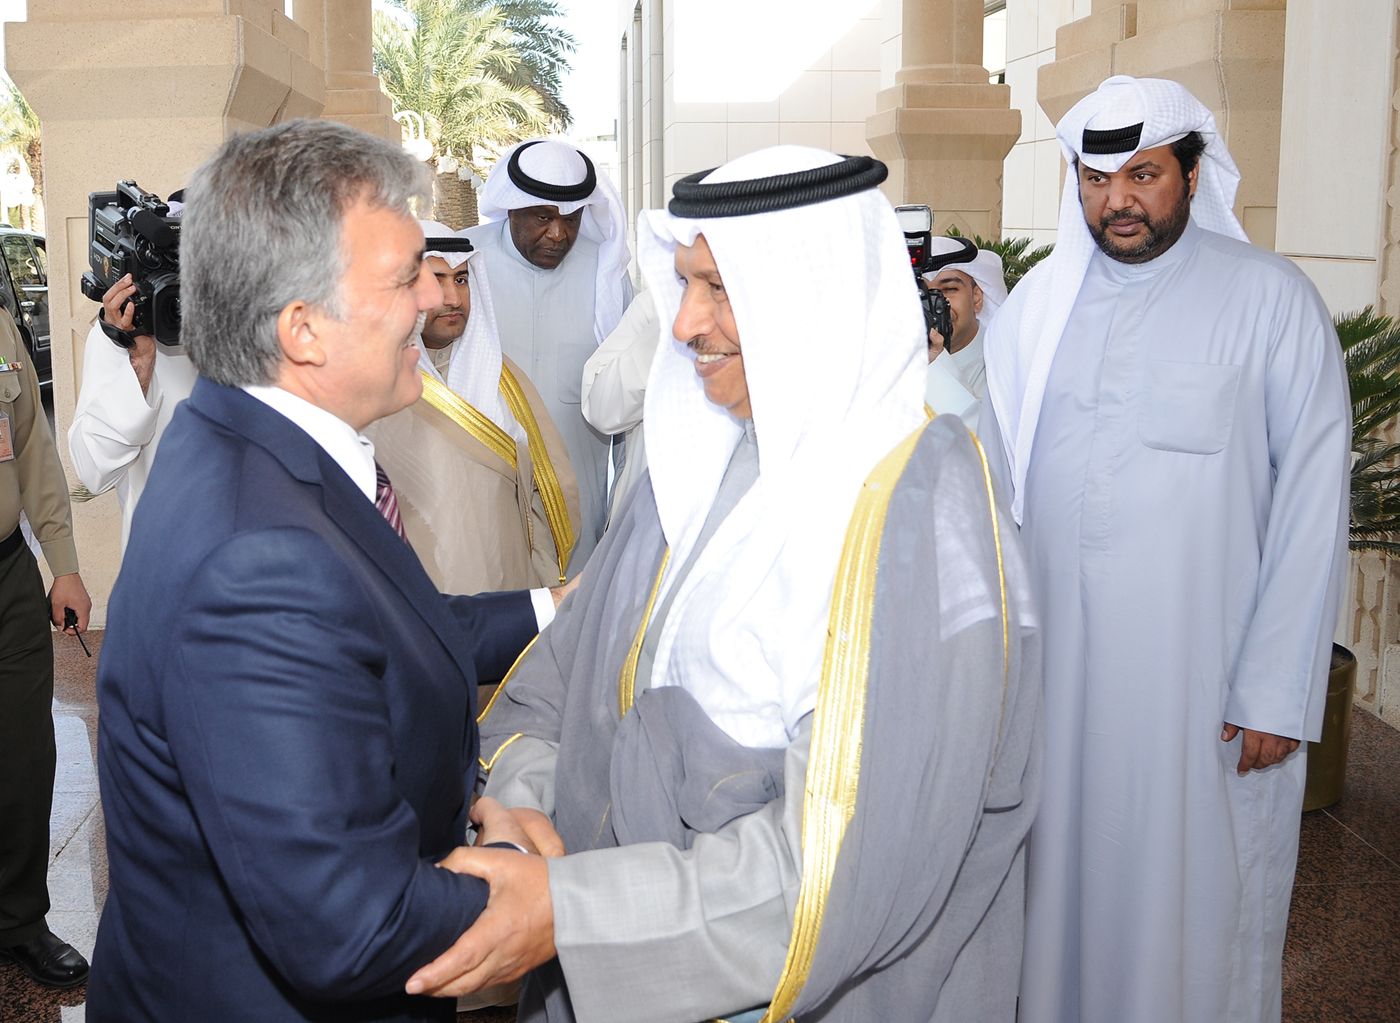 His Highness the Prime Minister Sheikh Jaber Al-Mubarak Al-Hamad Al-Sabah greets former Turkish President Abdullah Gul